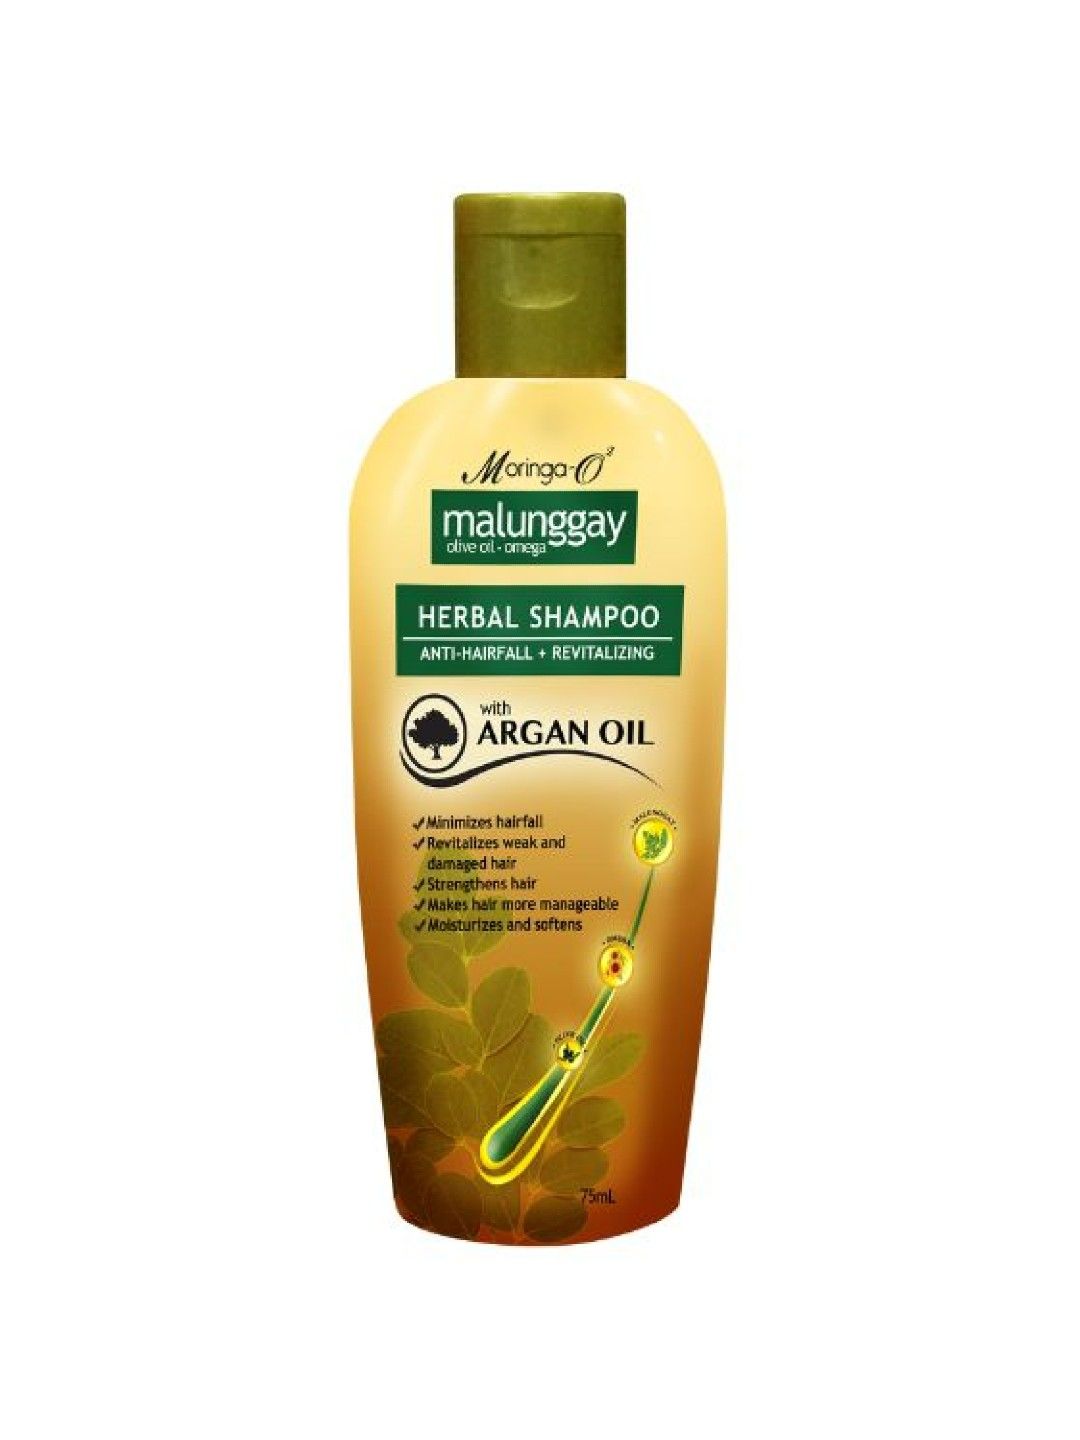 Moringa-O2 Anti-Hairfall Shampoo with Argan Oil (75ml)